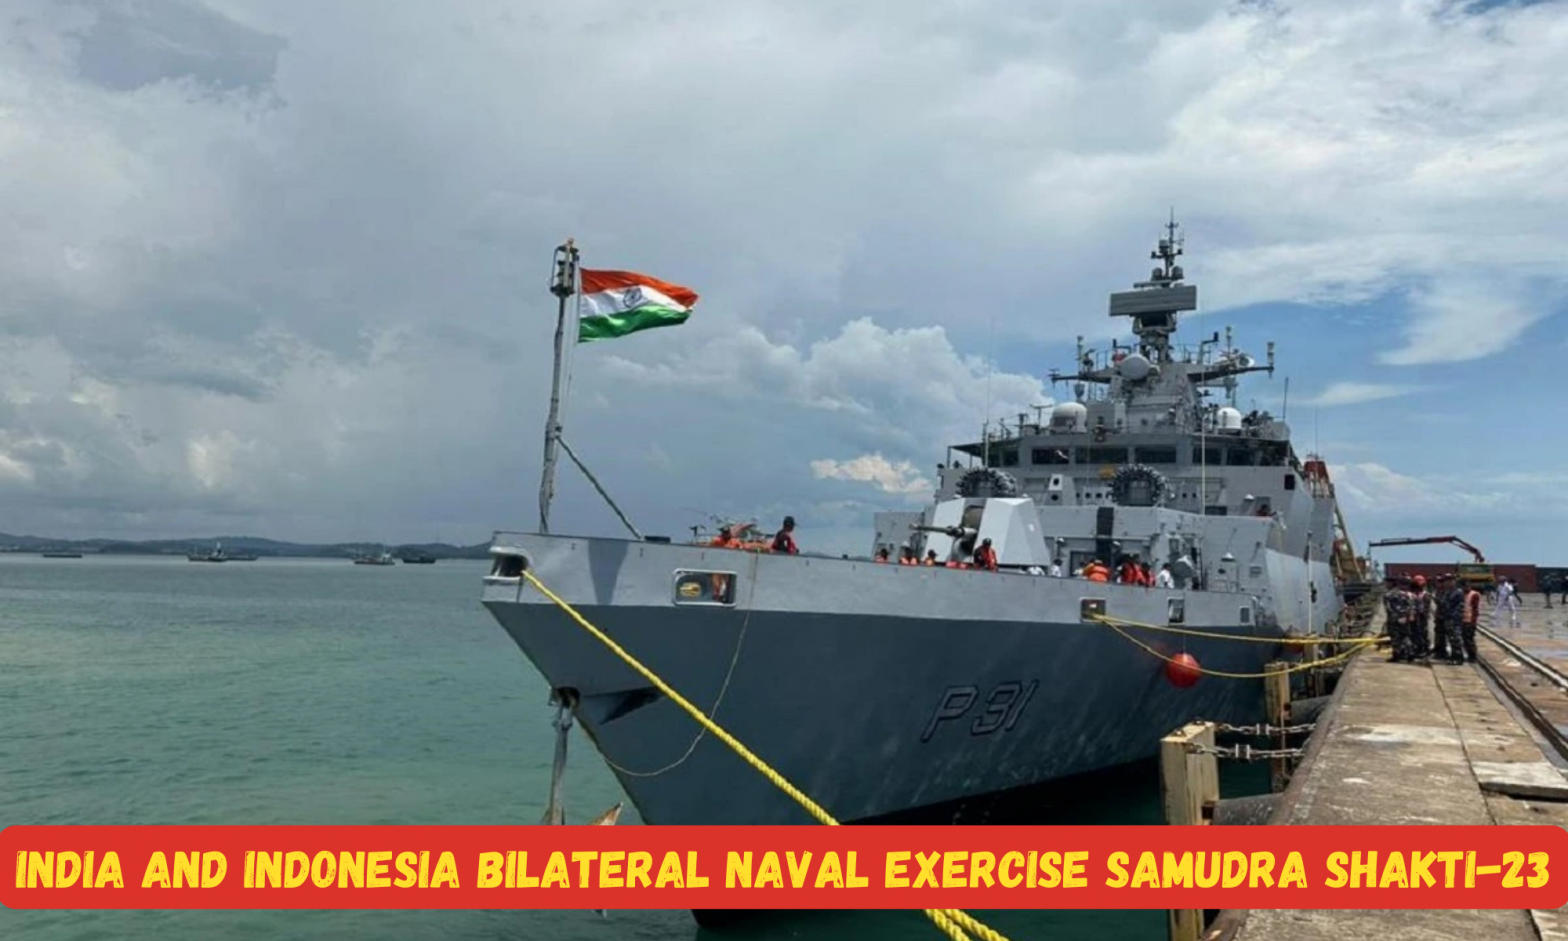 India and Indonesia bilateral naval exercise Samudra Shakti-23